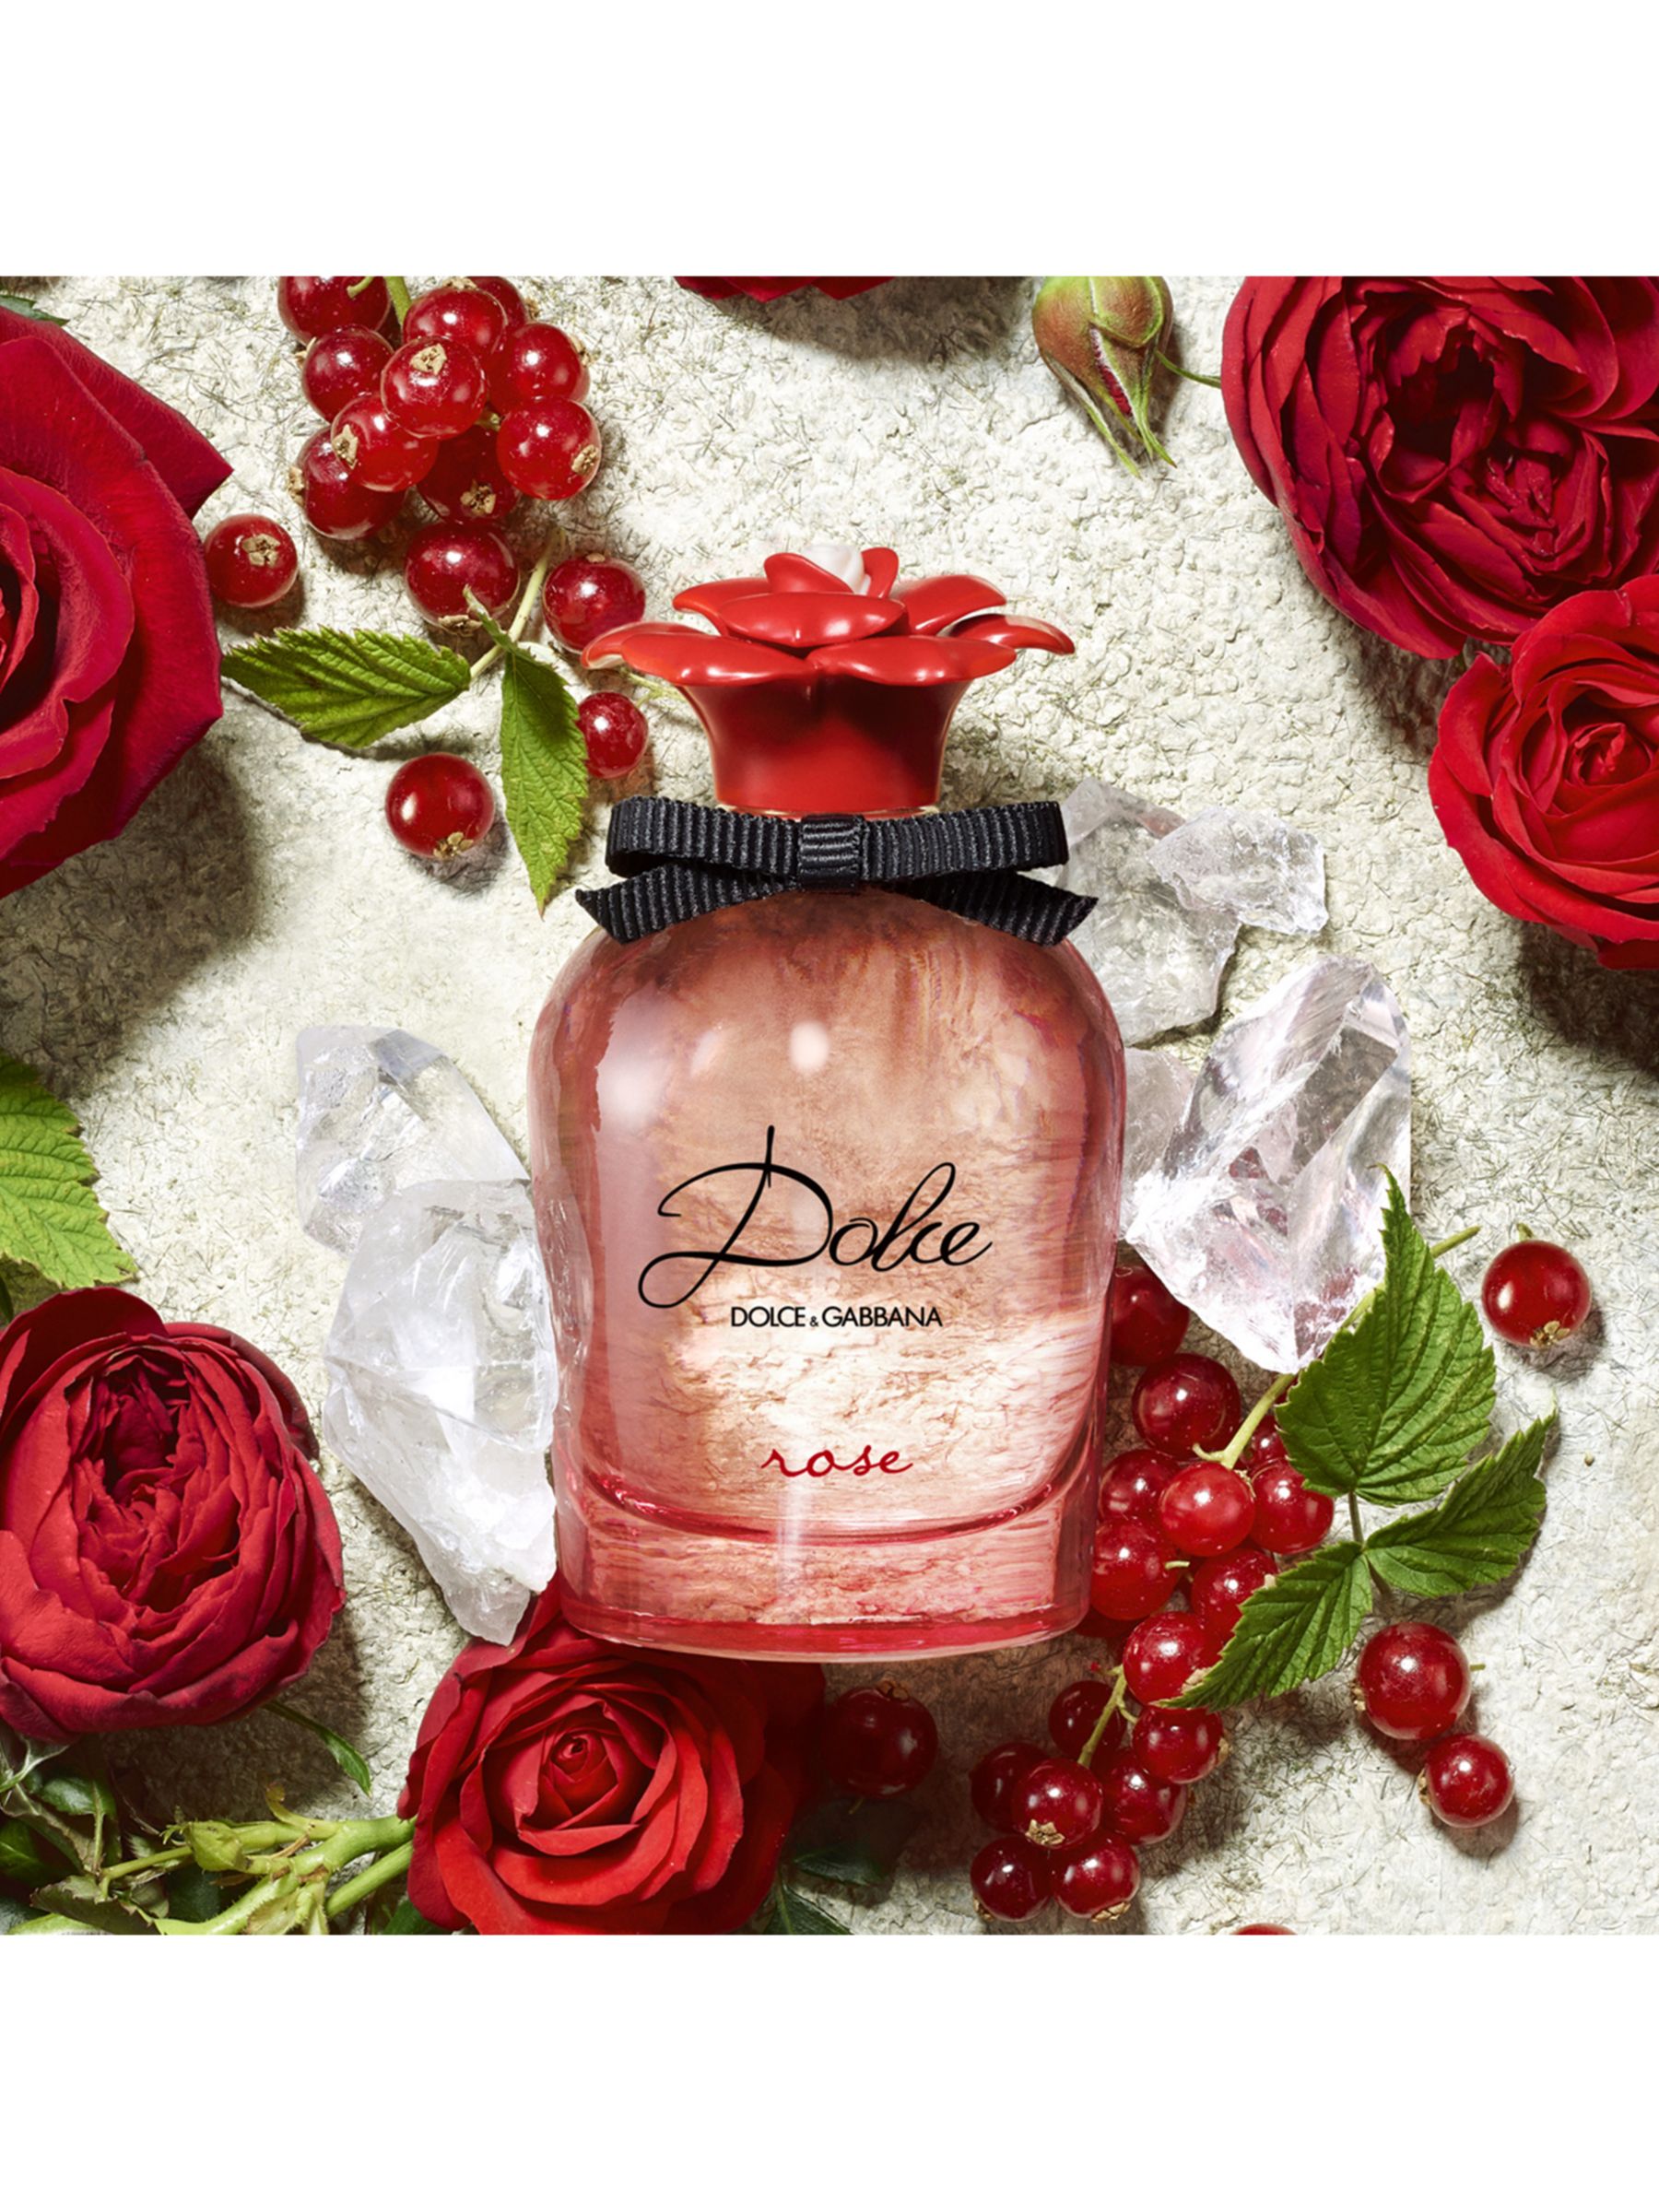 Dolce & Gabbana Dolce Rose Eau de Toilette, 75ml 3